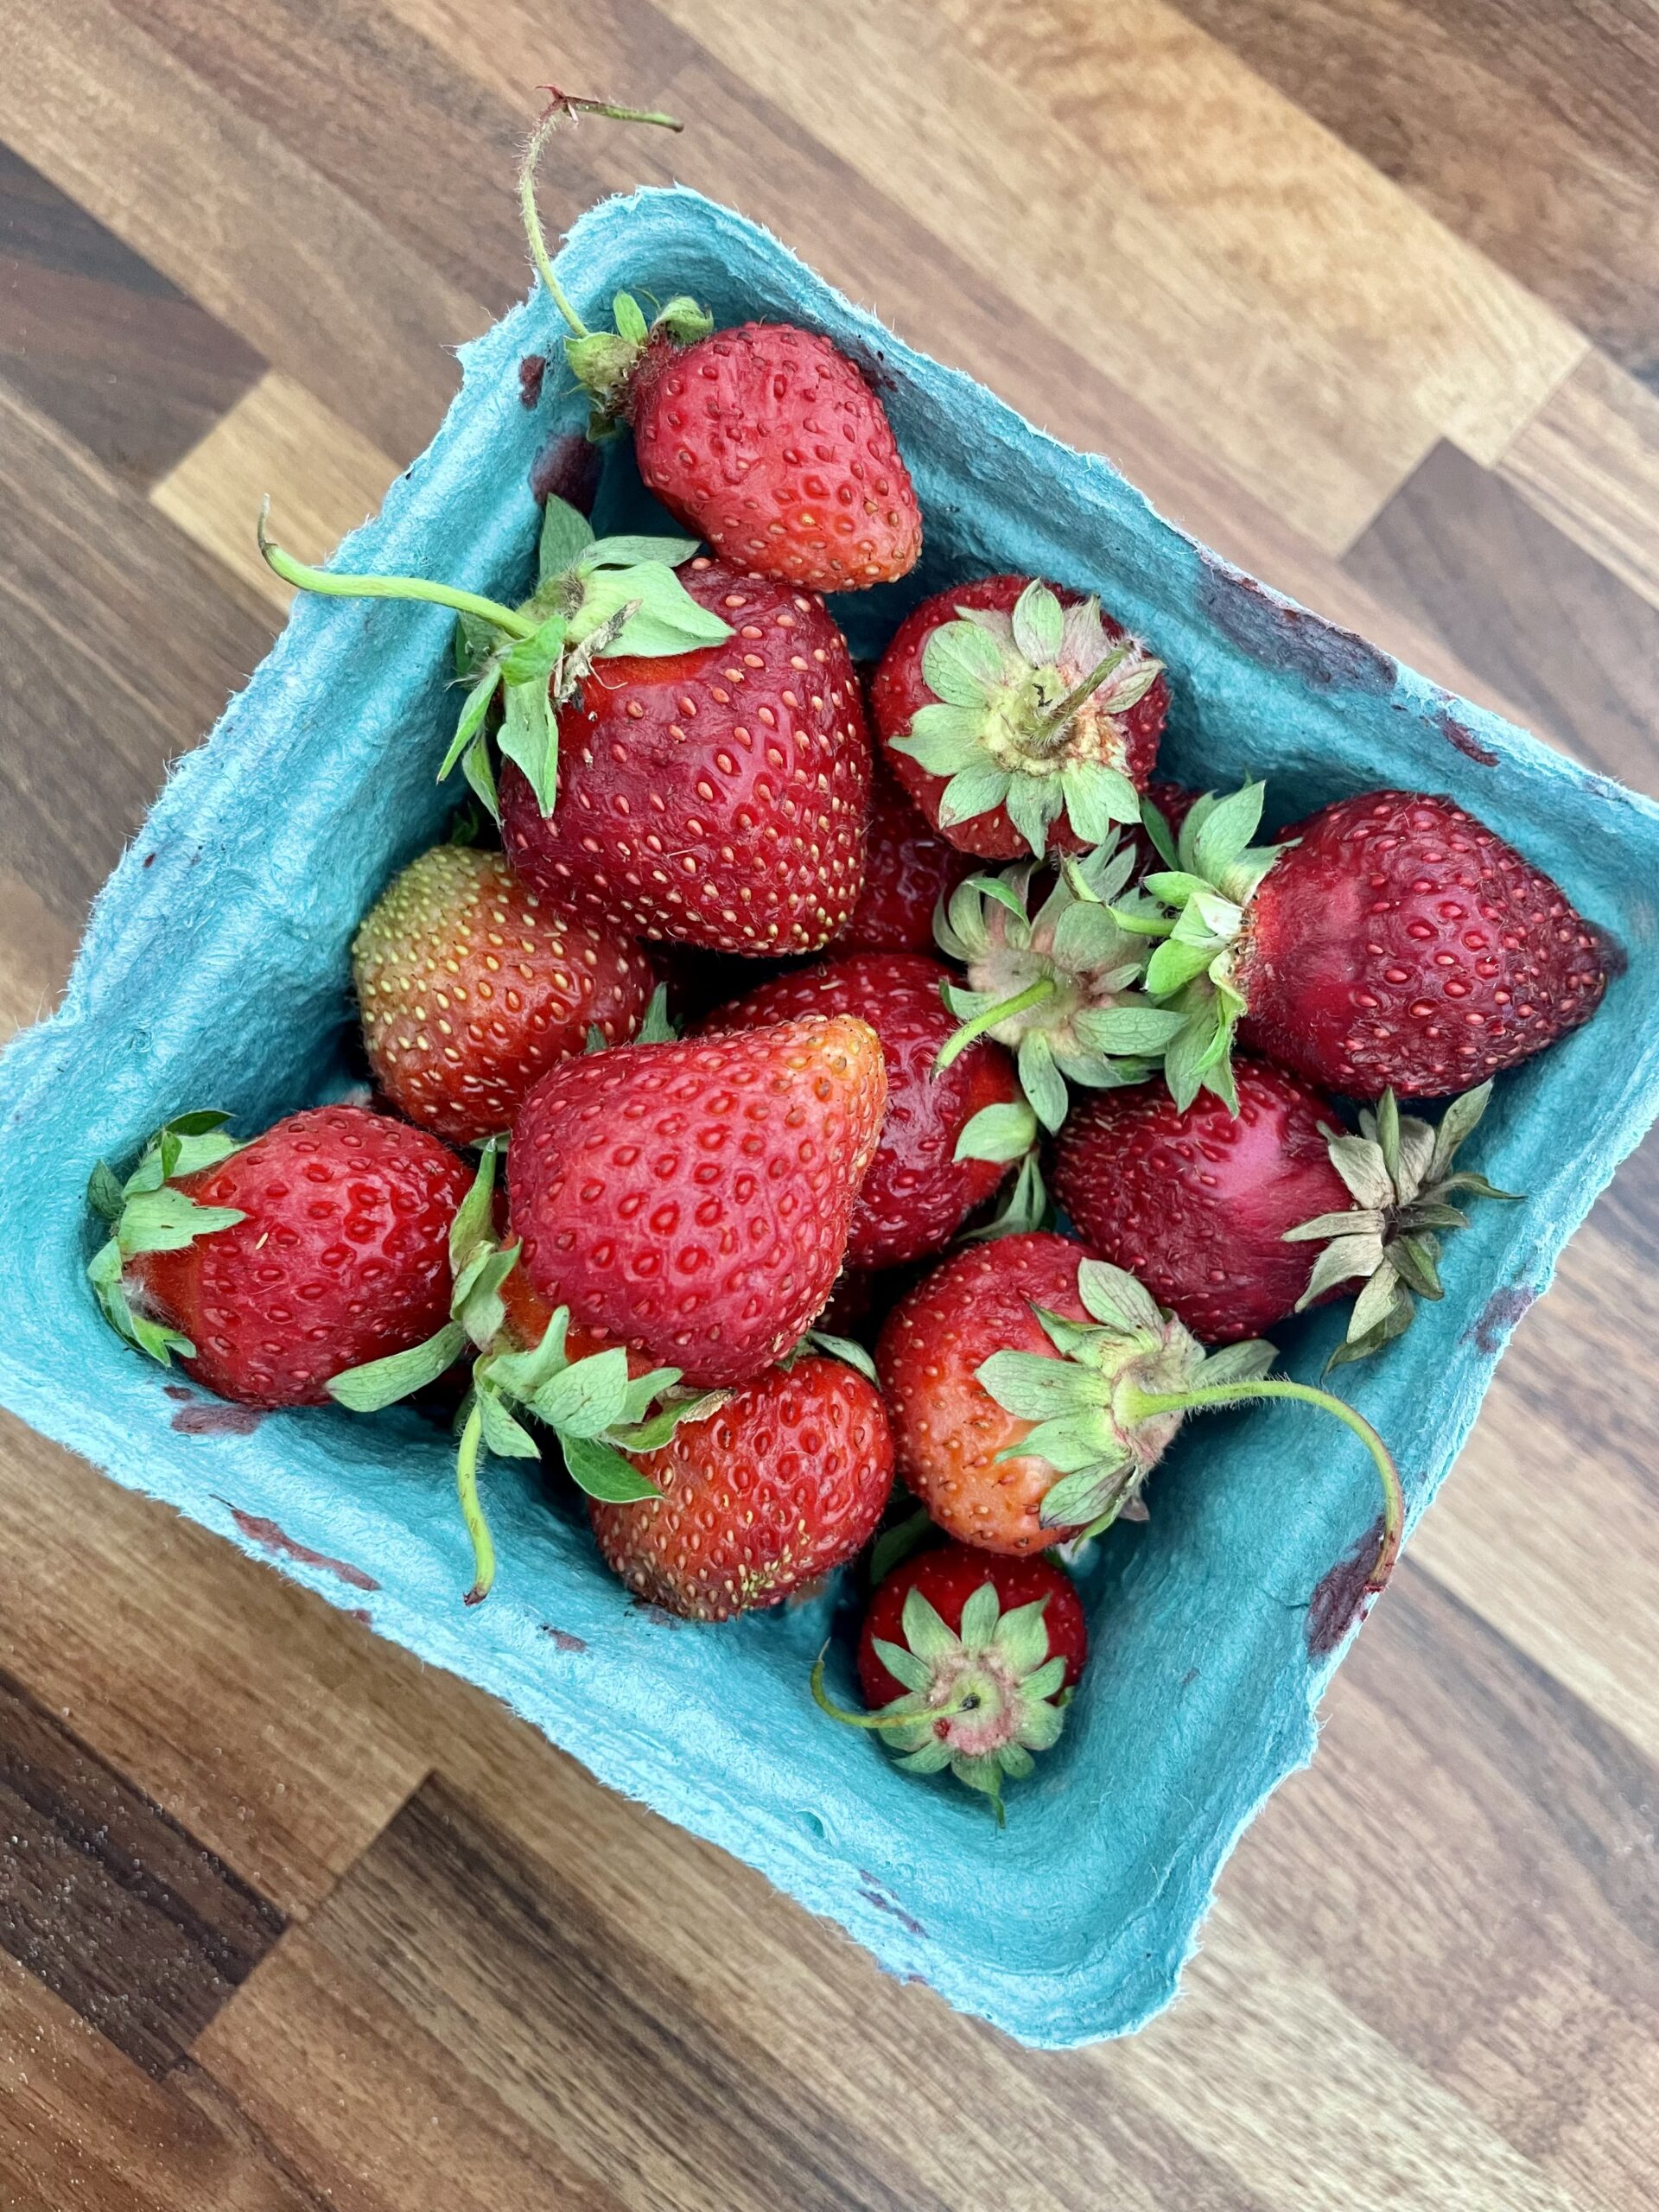 carton of strawberries